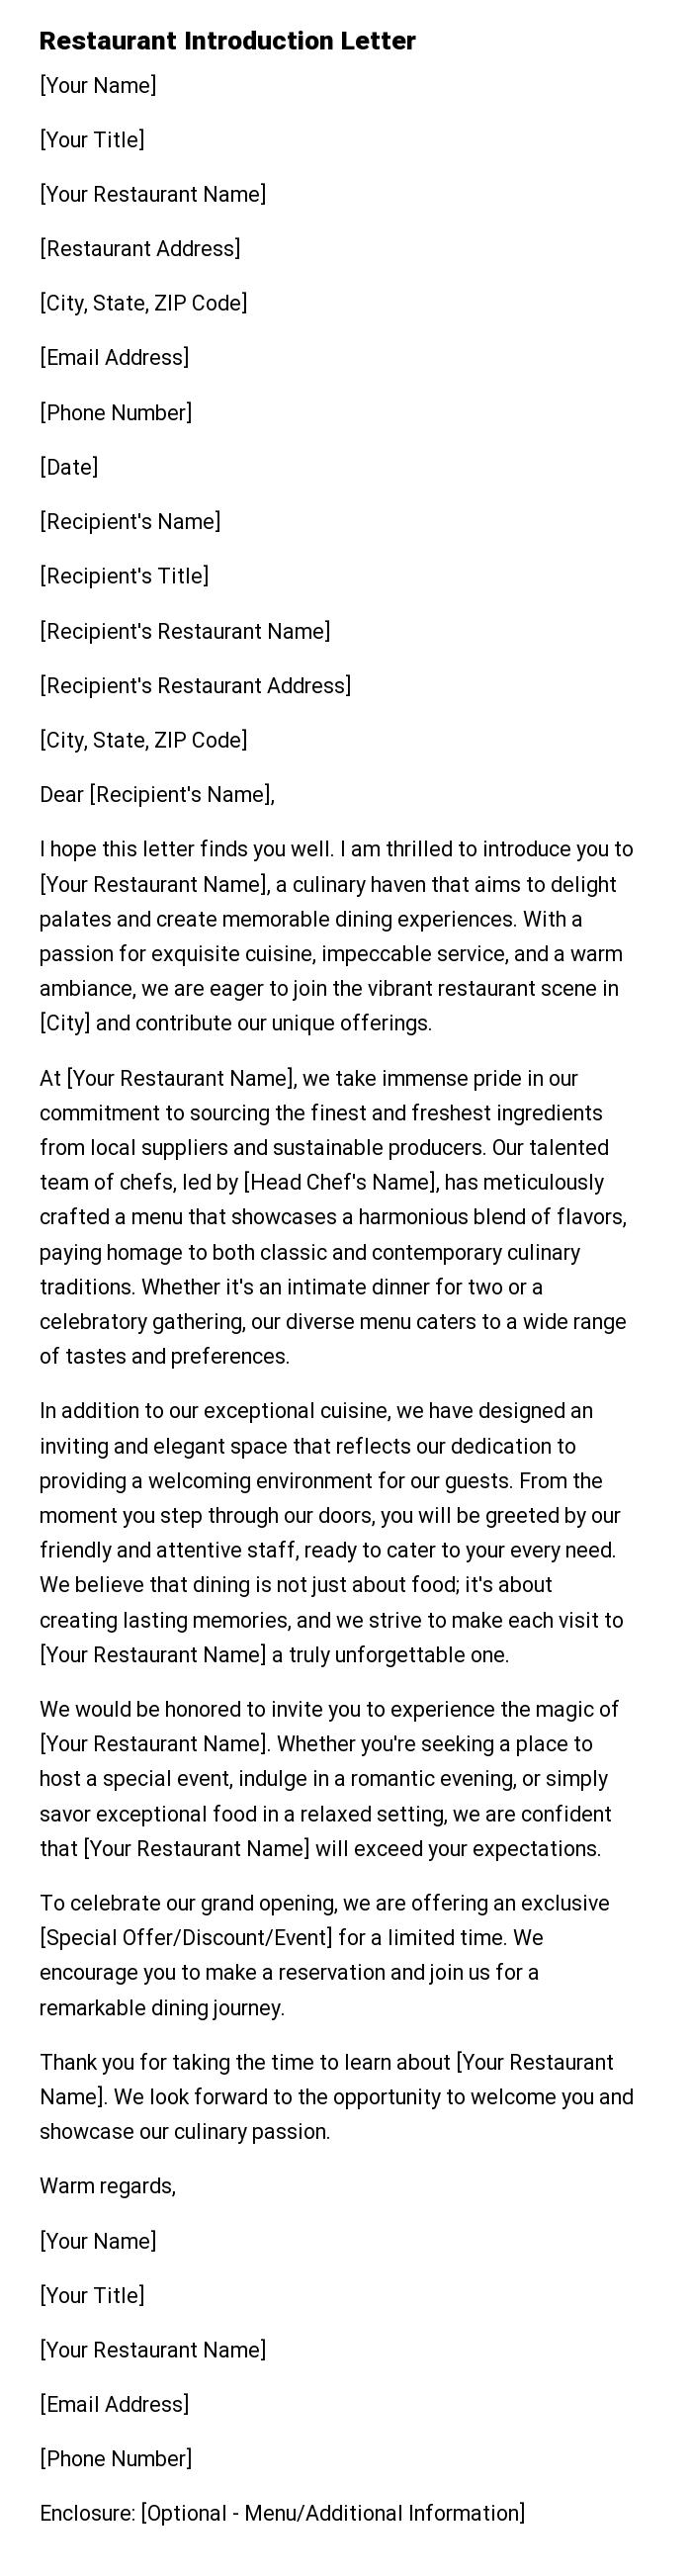 Restaurant Introduction Letter